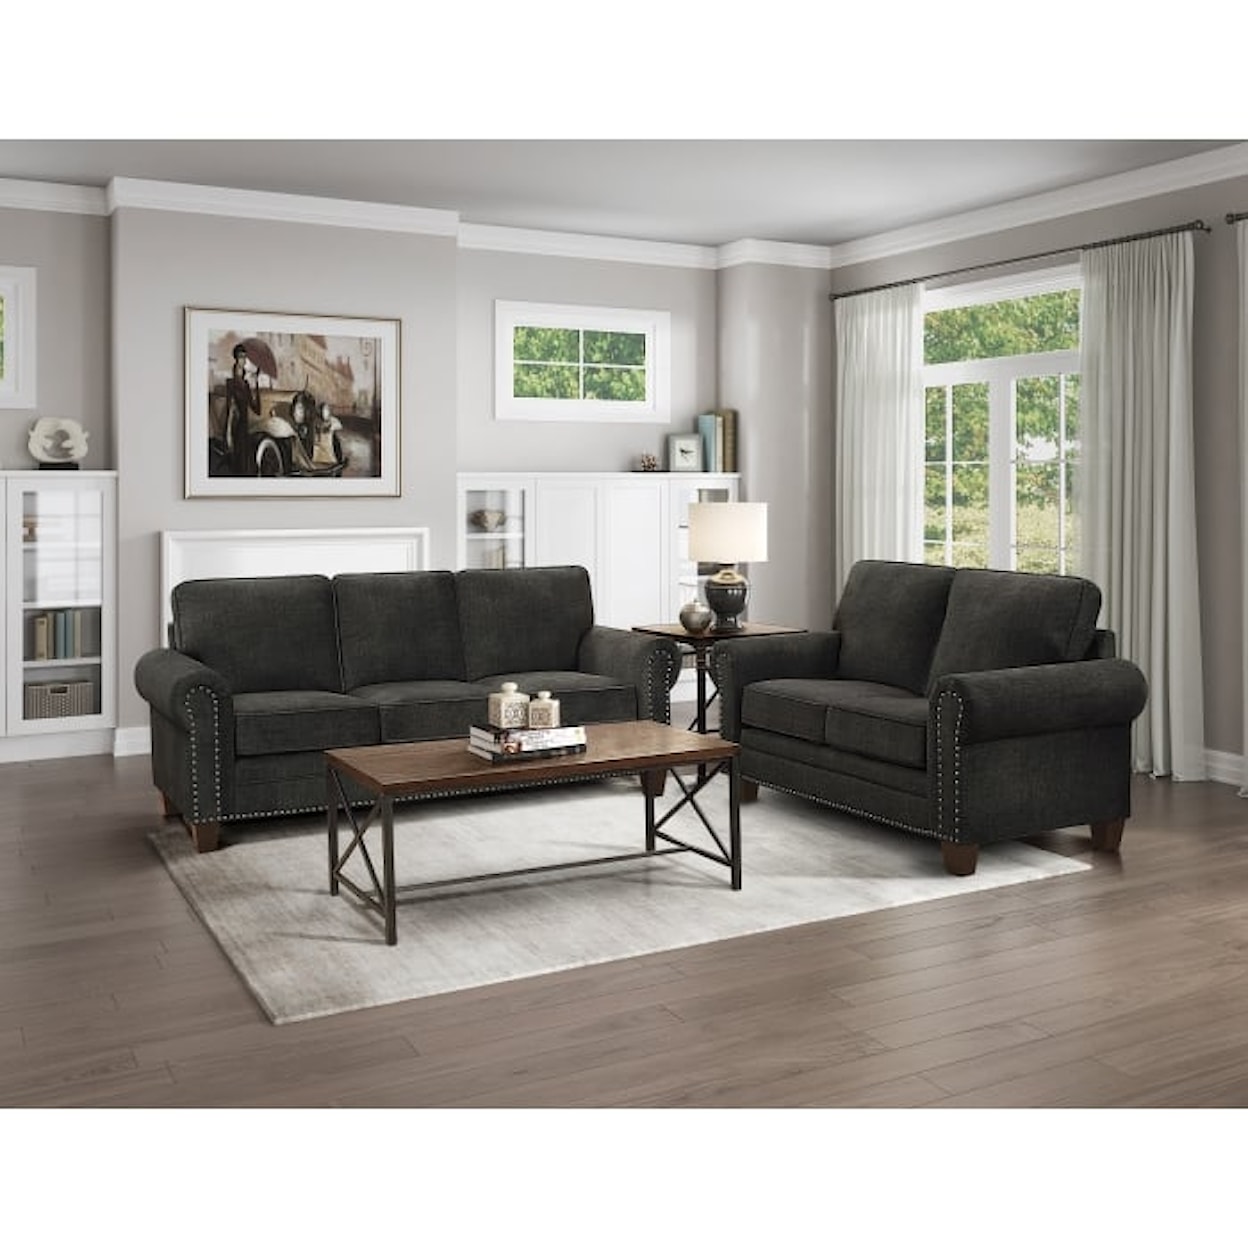 Homelegance Furniture Cornelia Living Room Set